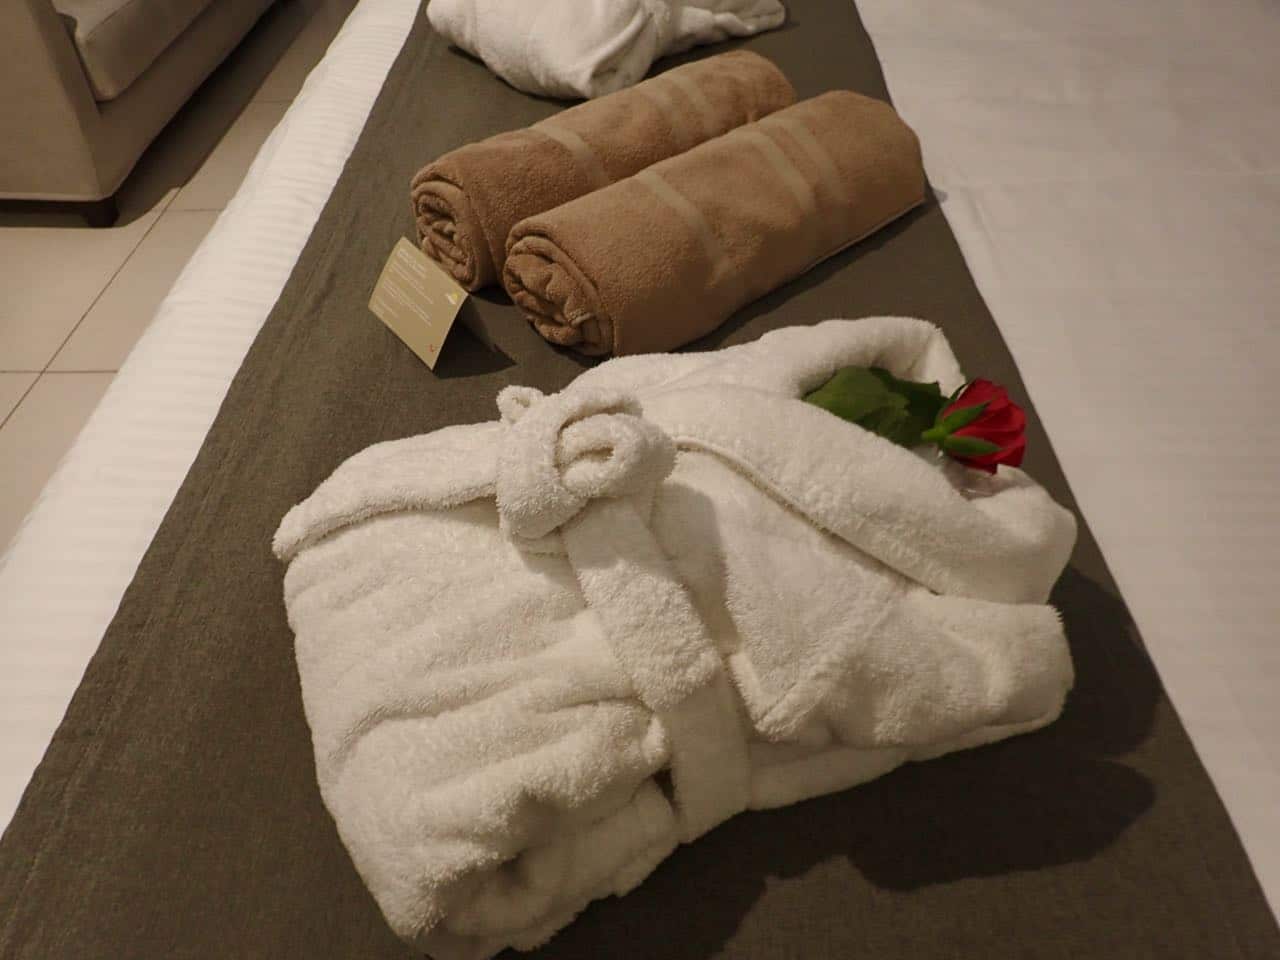 Sensimar Hotel bedroom bathrobe review